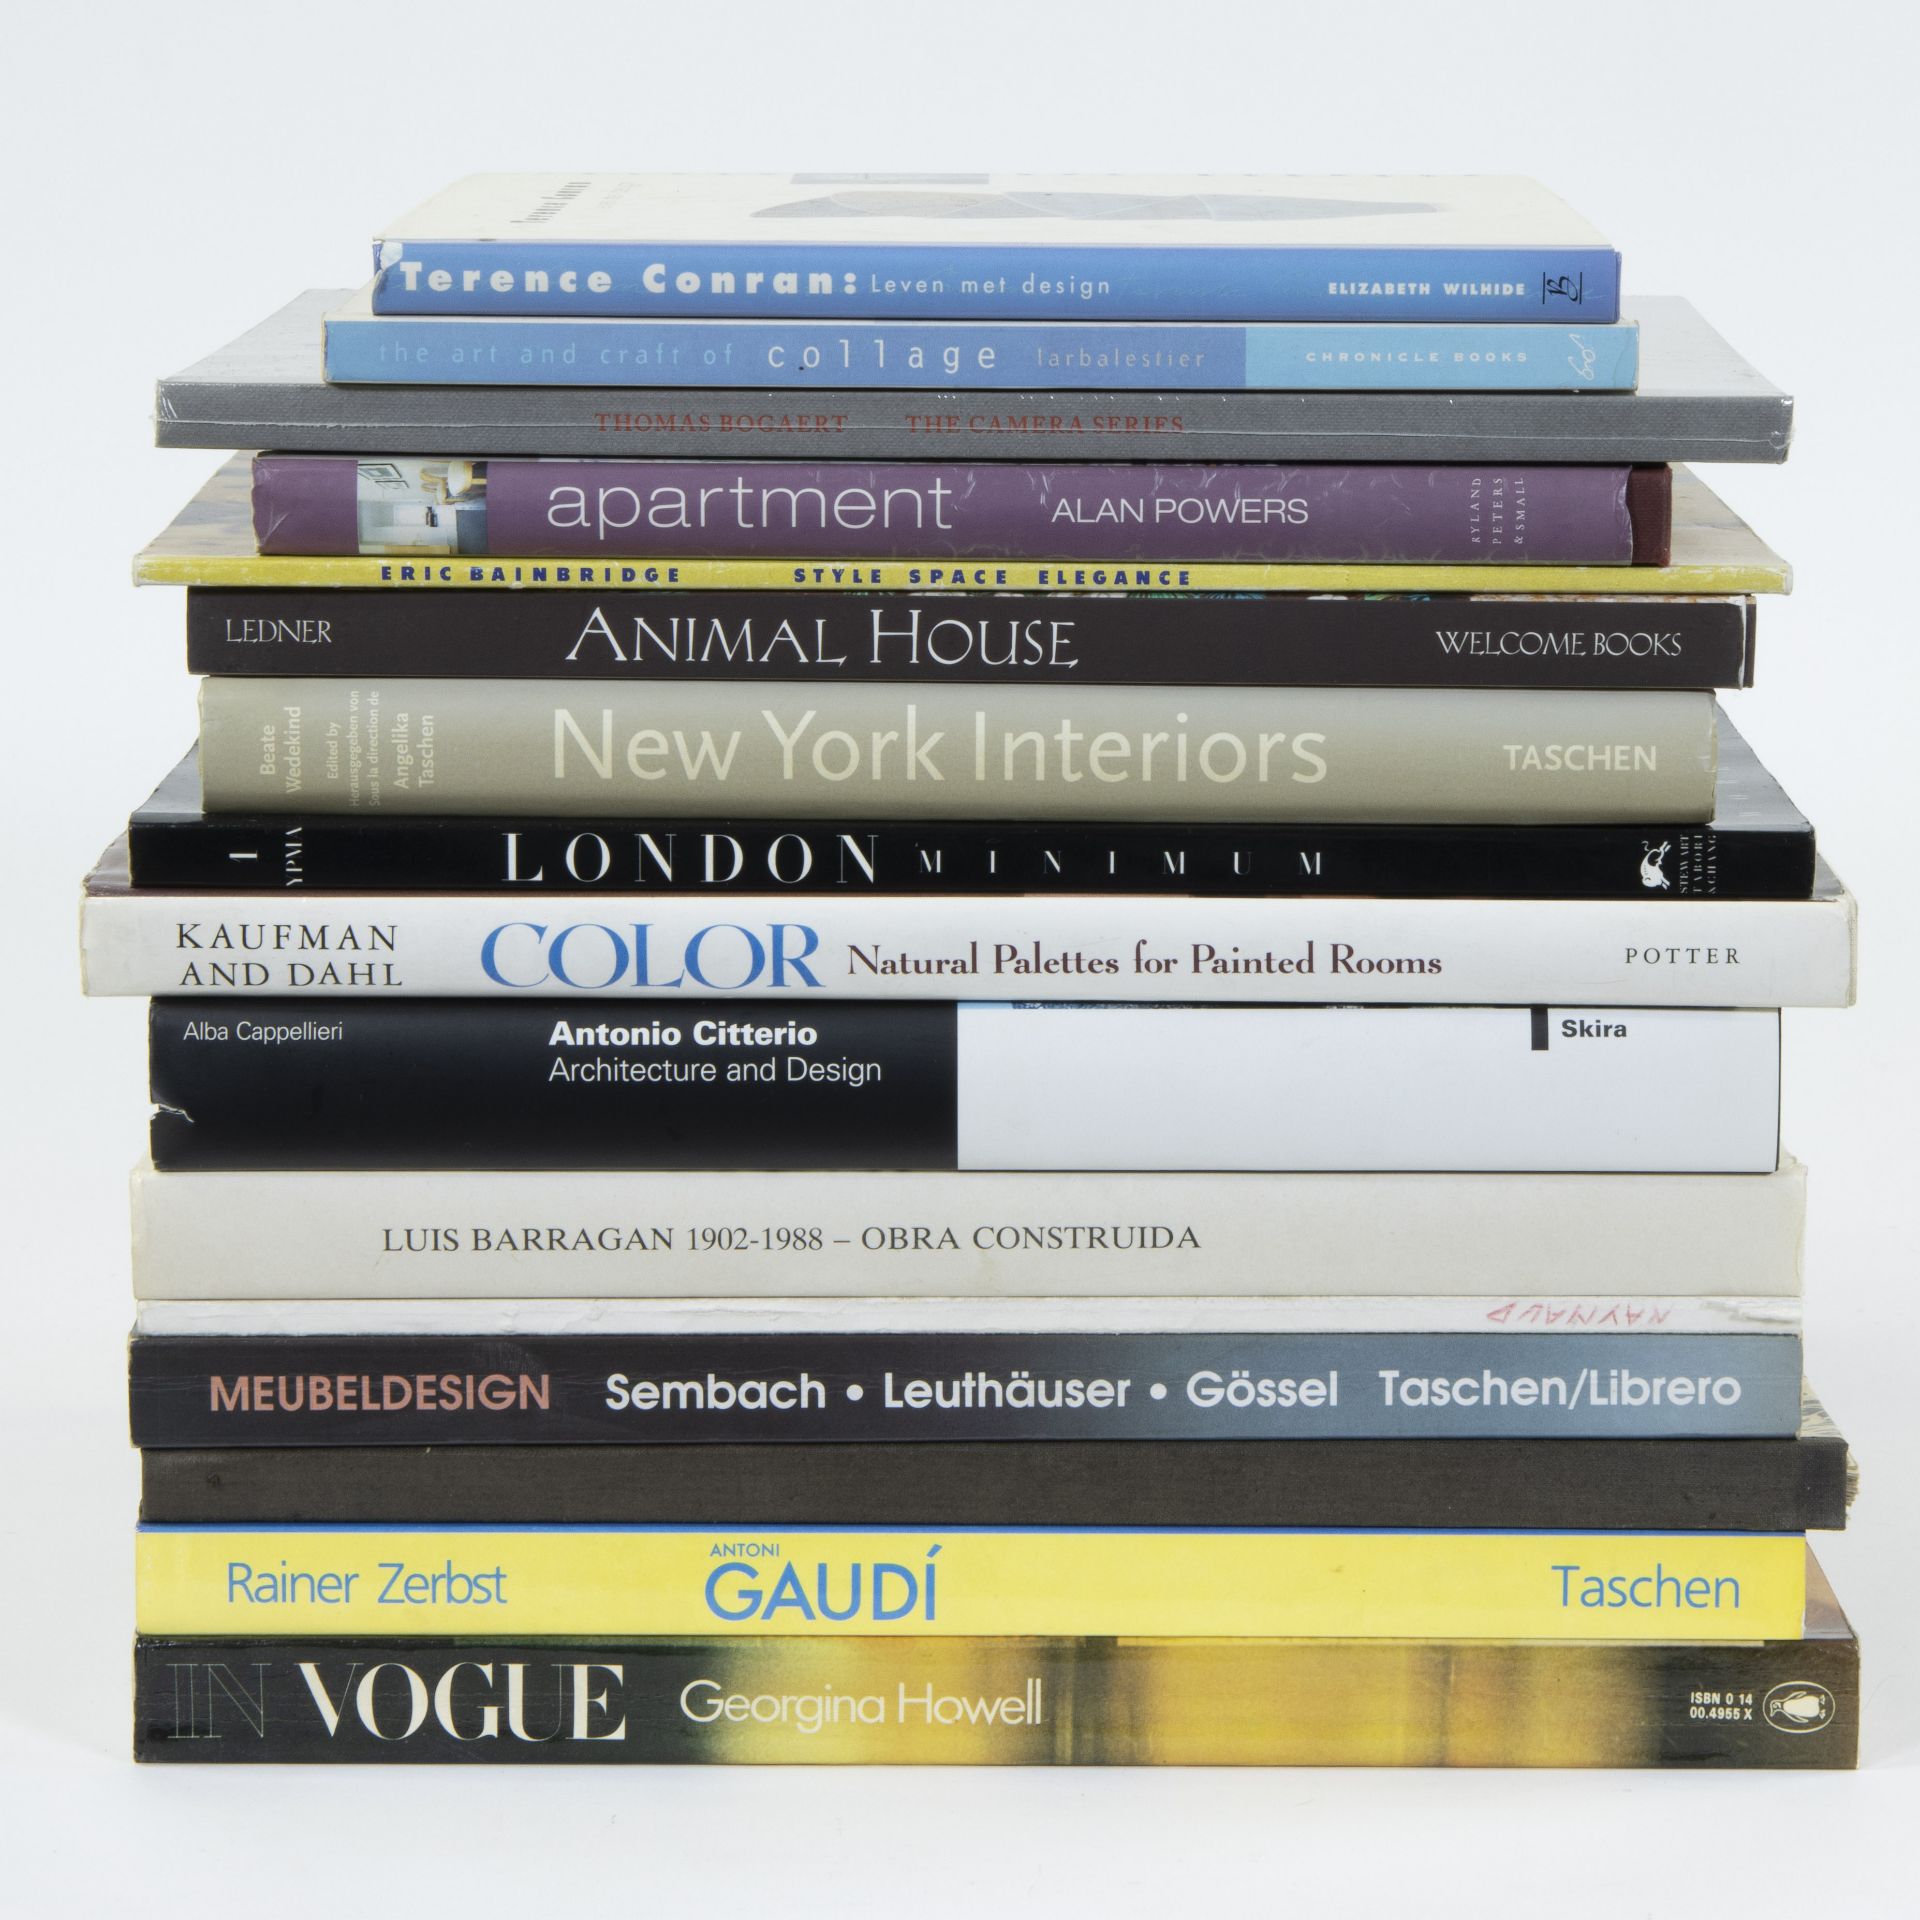 Collection of art books on interior design, furniture design, architecture